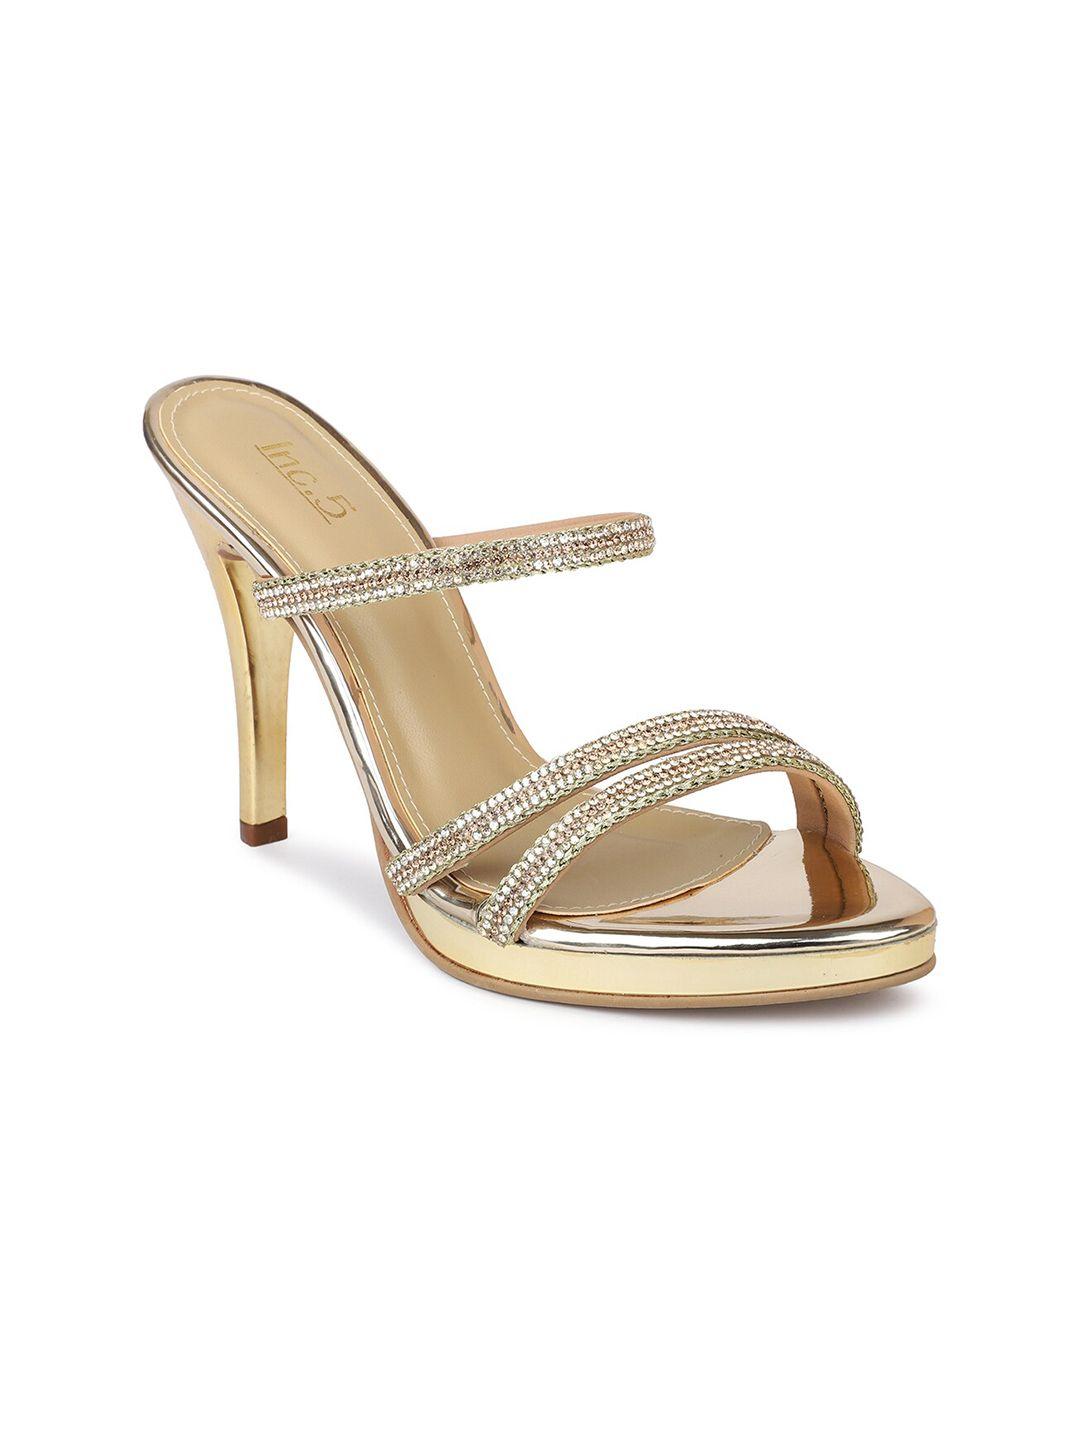 inc 5 women gold-toned & gold-toned ethnic comfort sandals